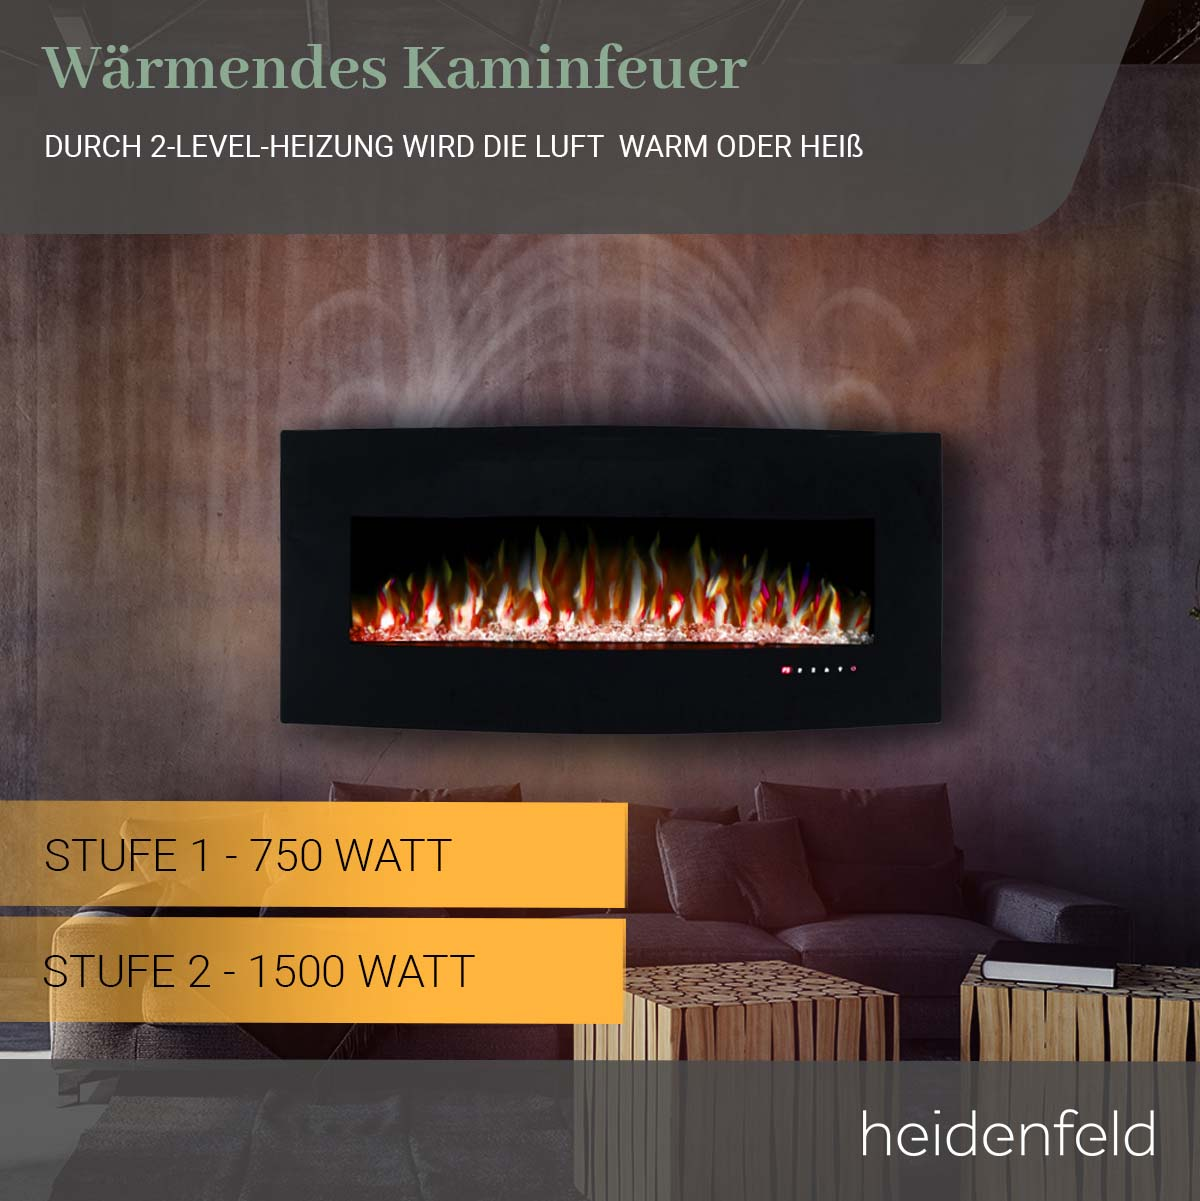 Elektrokamin Watt) HEIDENFELD HF-WK400 (1500